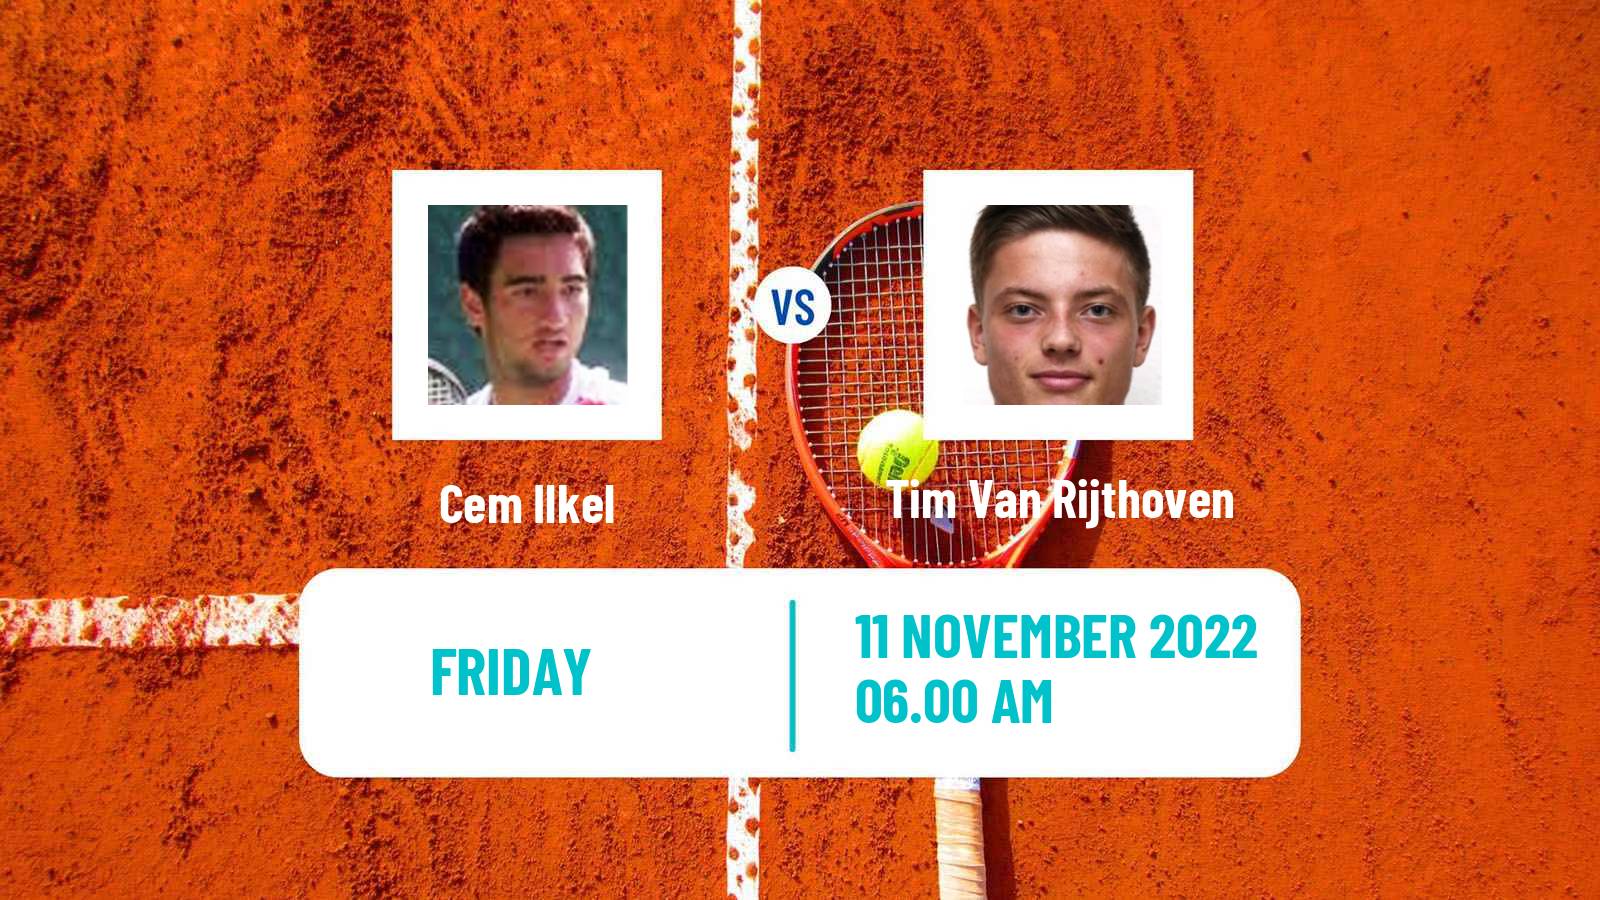 Tennis ATP Challenger Cem Ilkel - Tim Van Rijthoven